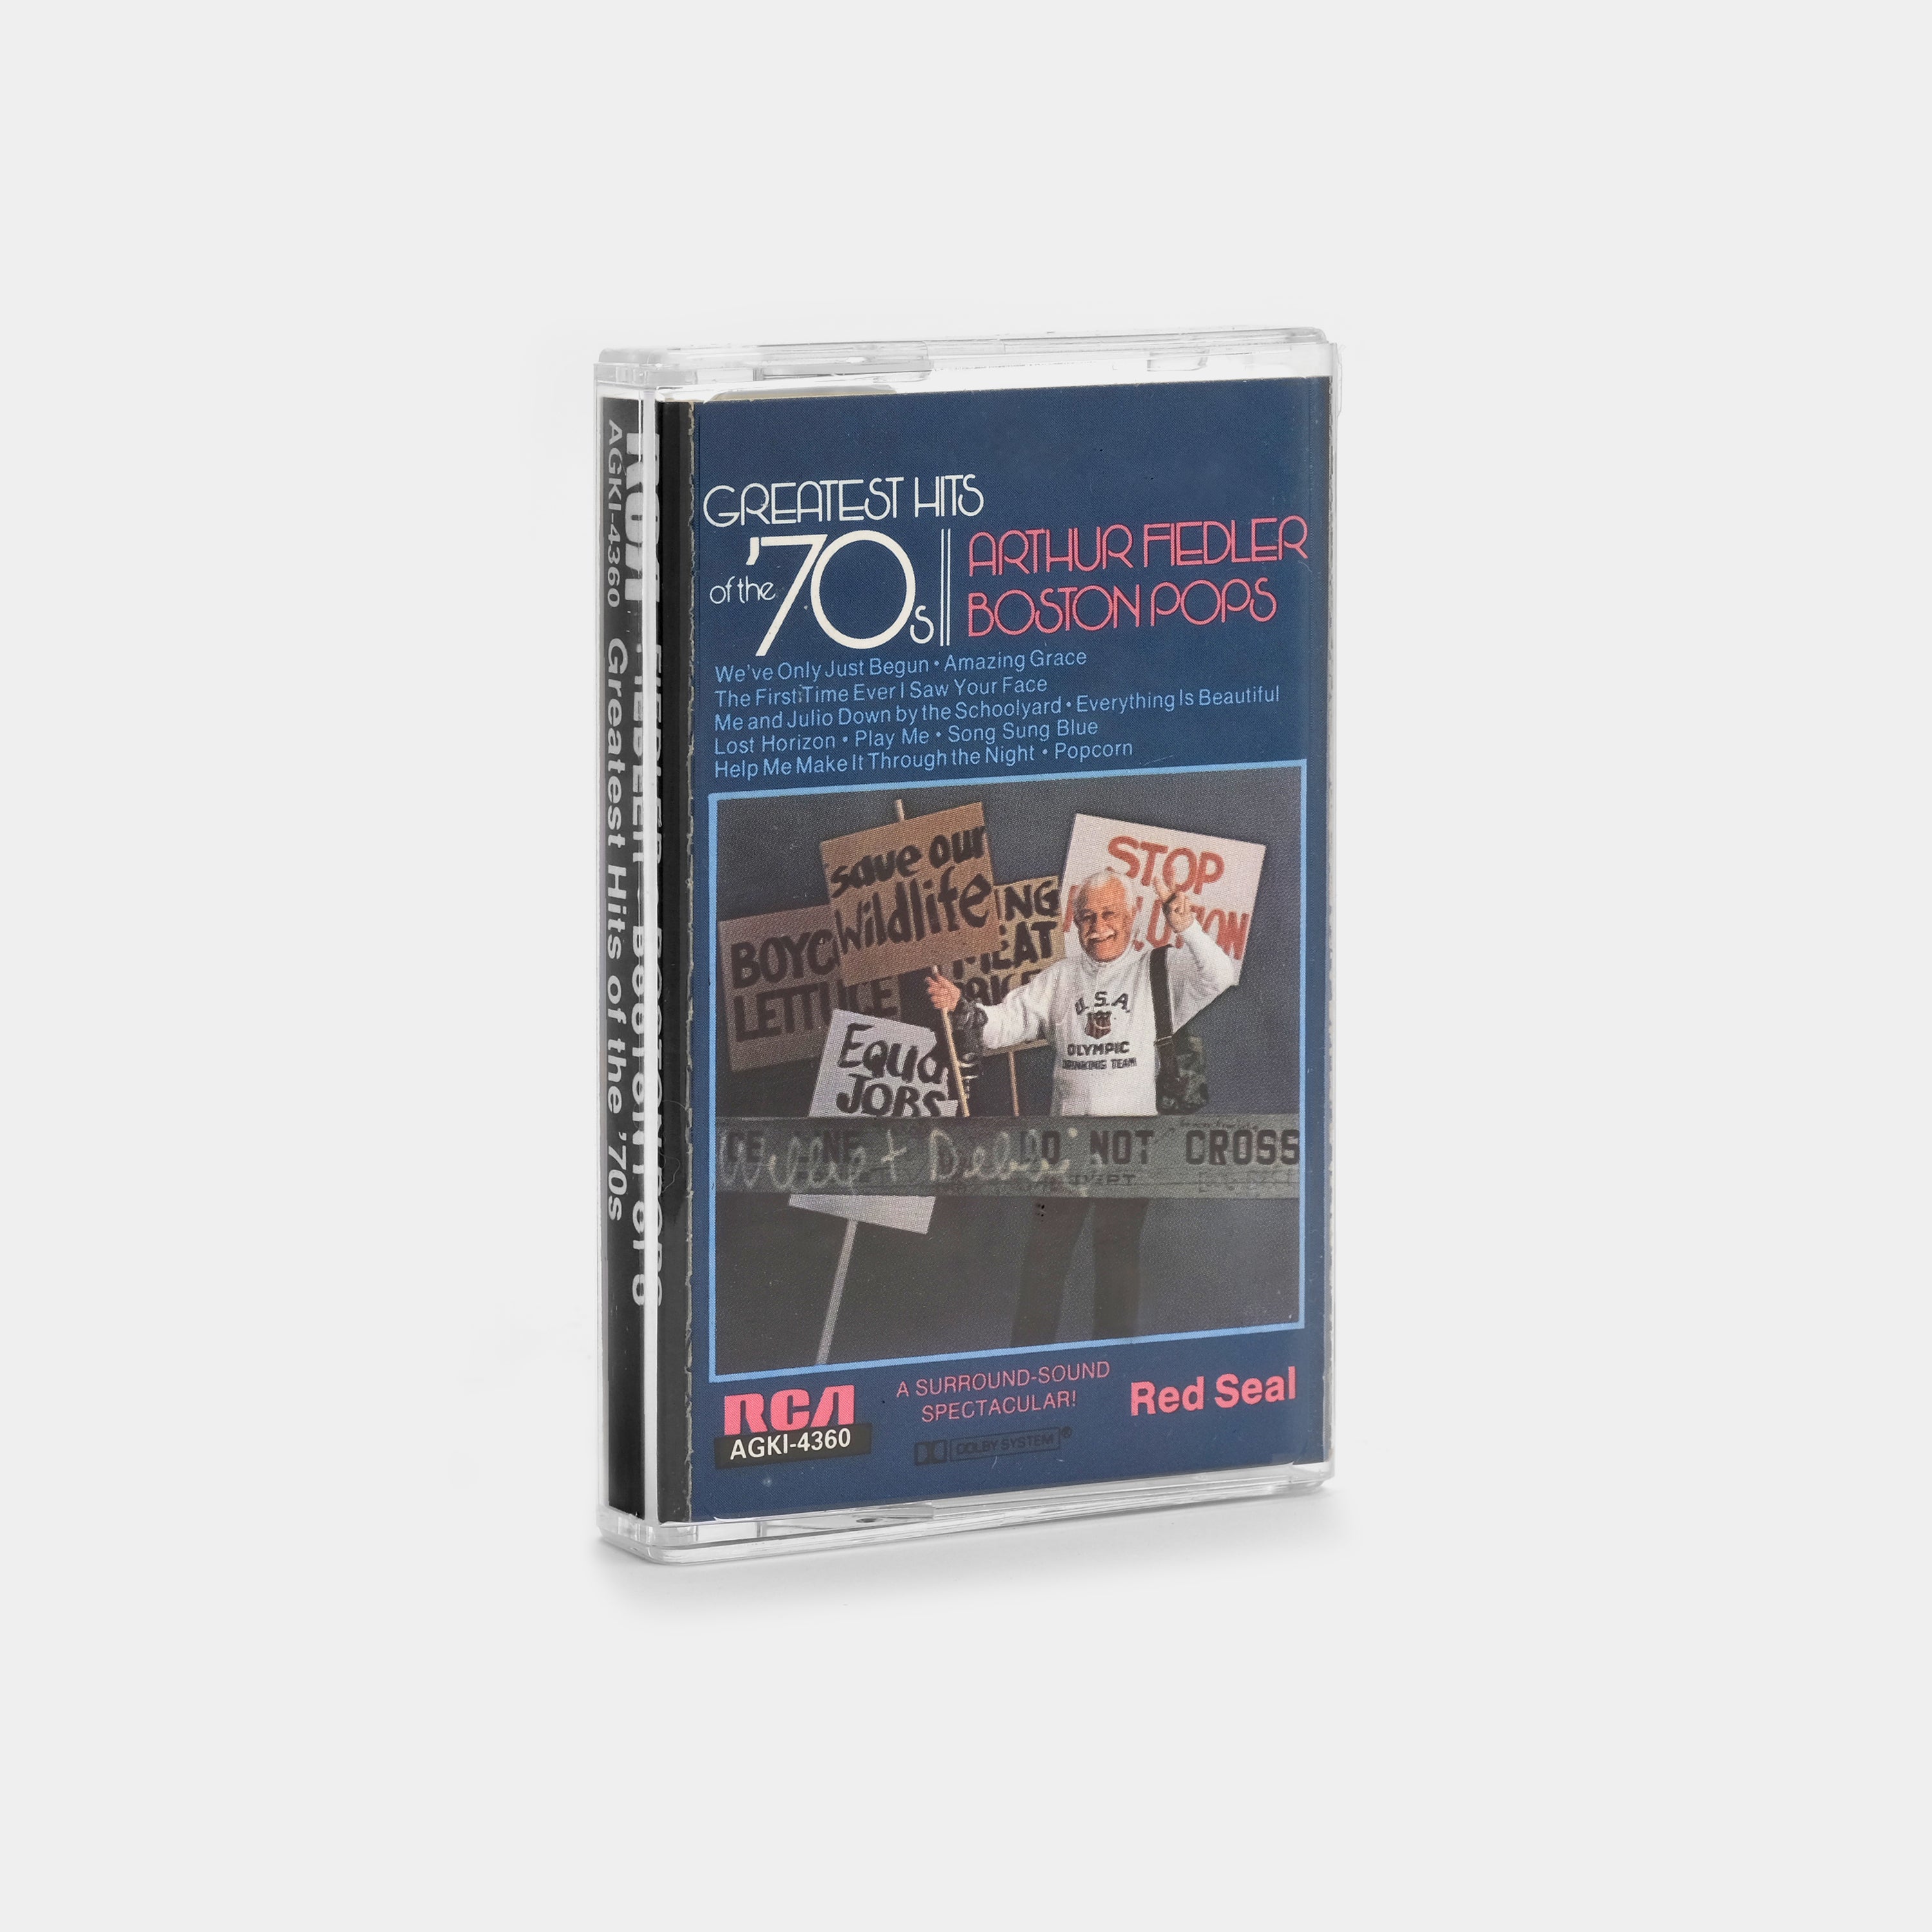 Arthur Fiedler And The Boston Pops - Greatest Hits Of The 70's Cassette Tape